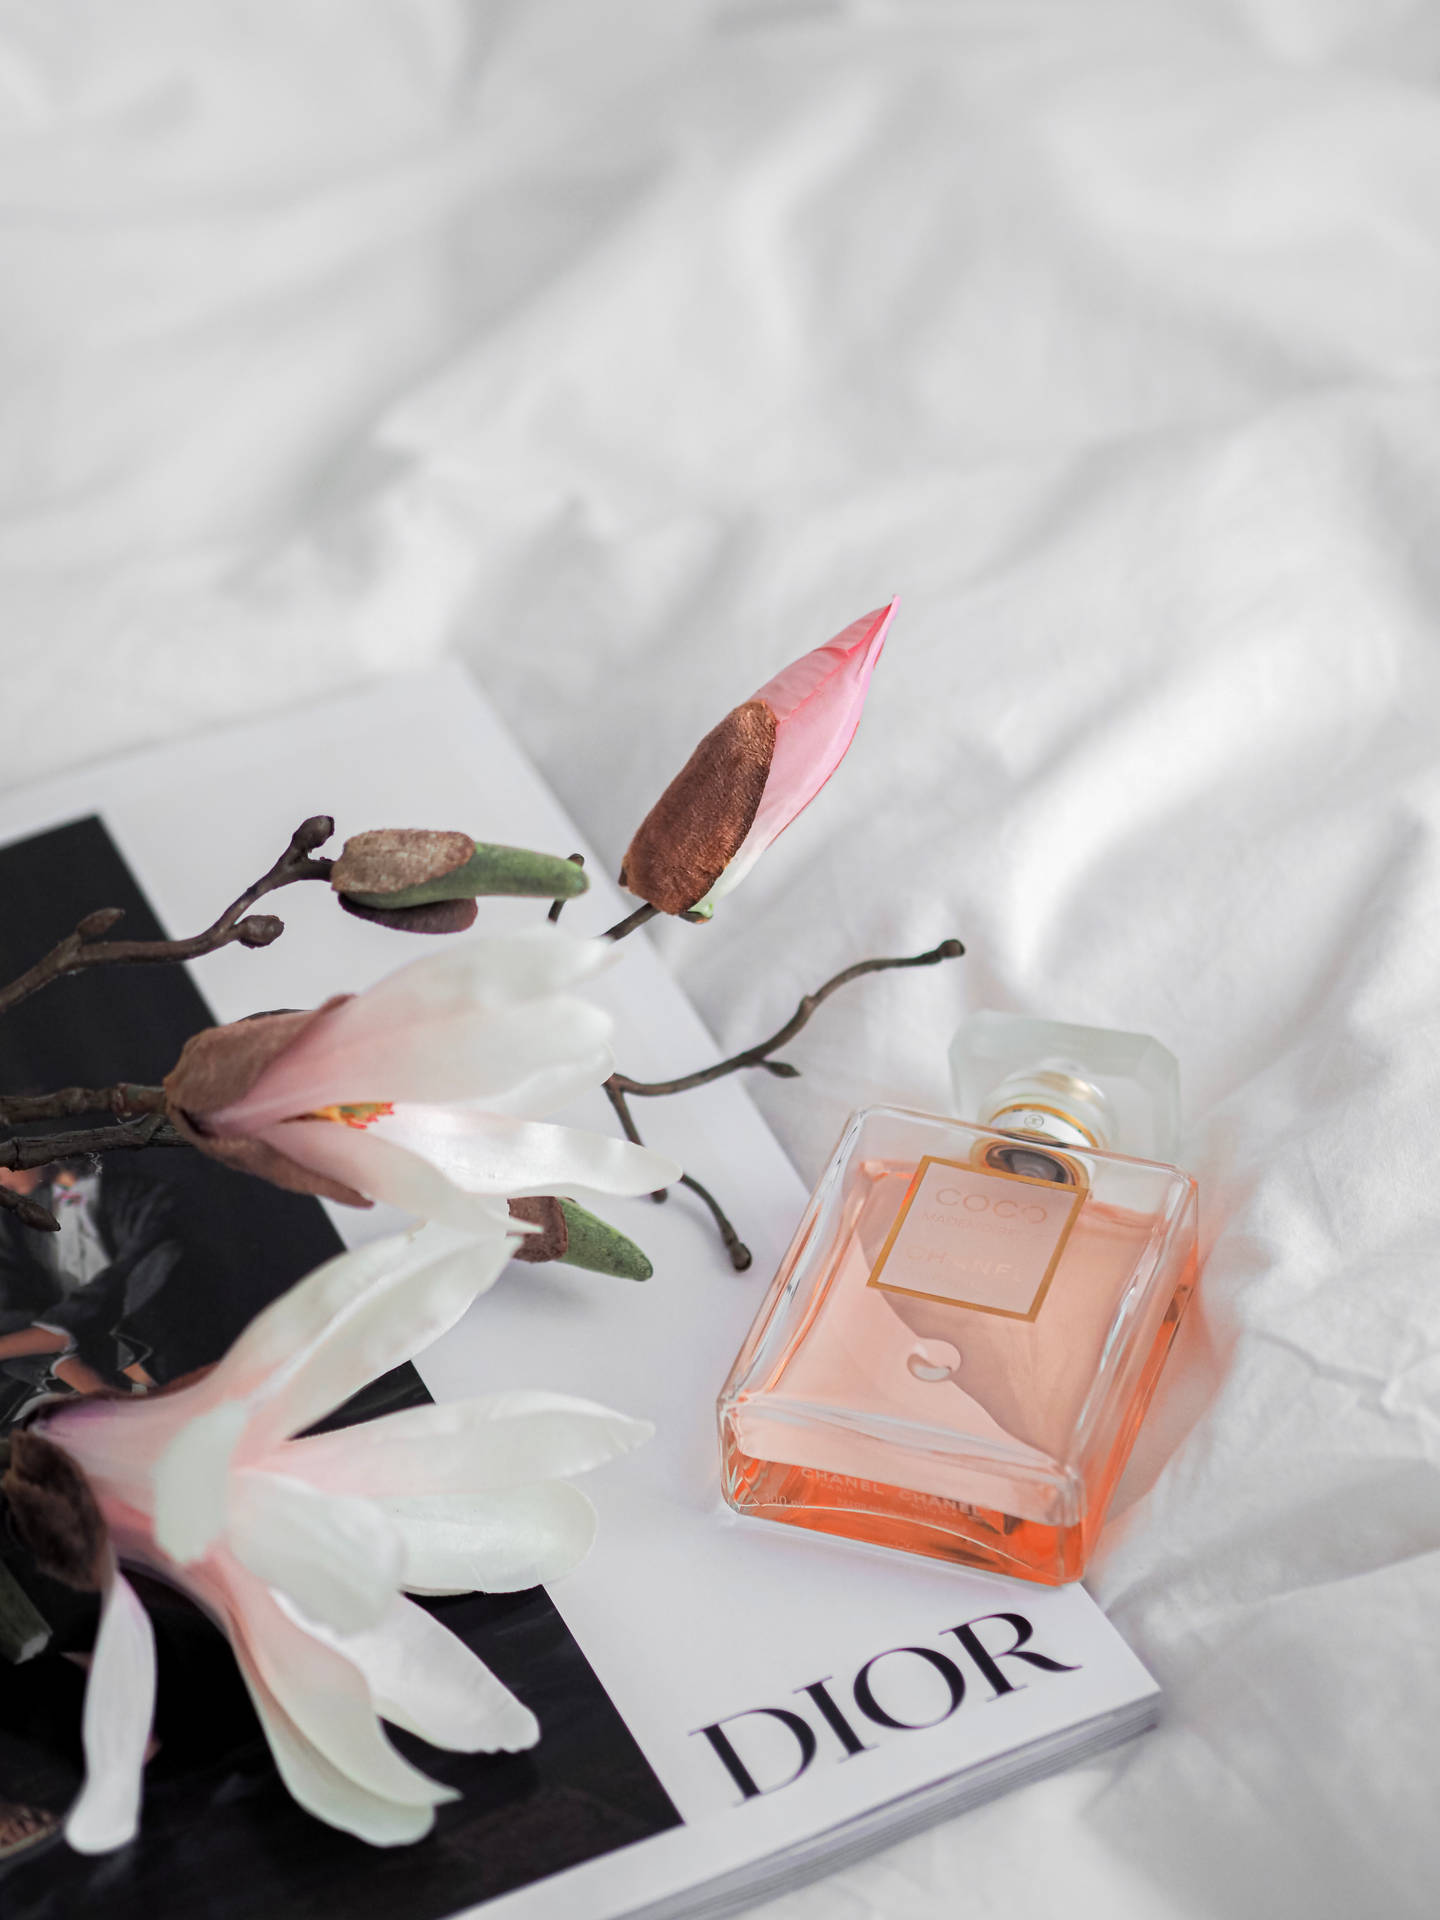 Dior Magazine With Perfume Background